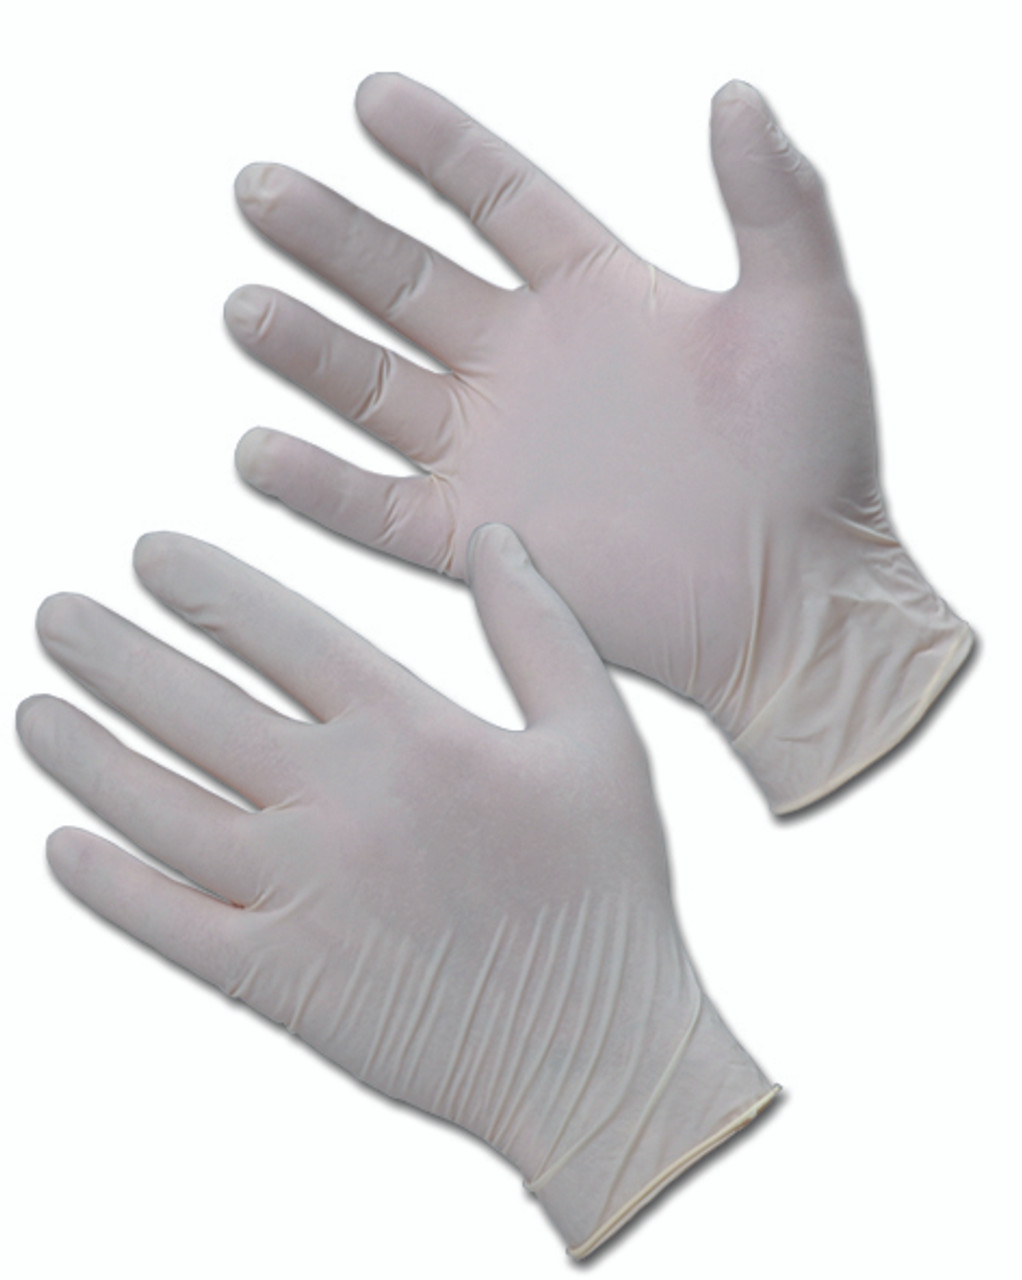 Latex Disposable Gloves Powdered - Xsmall, 100 Per Box